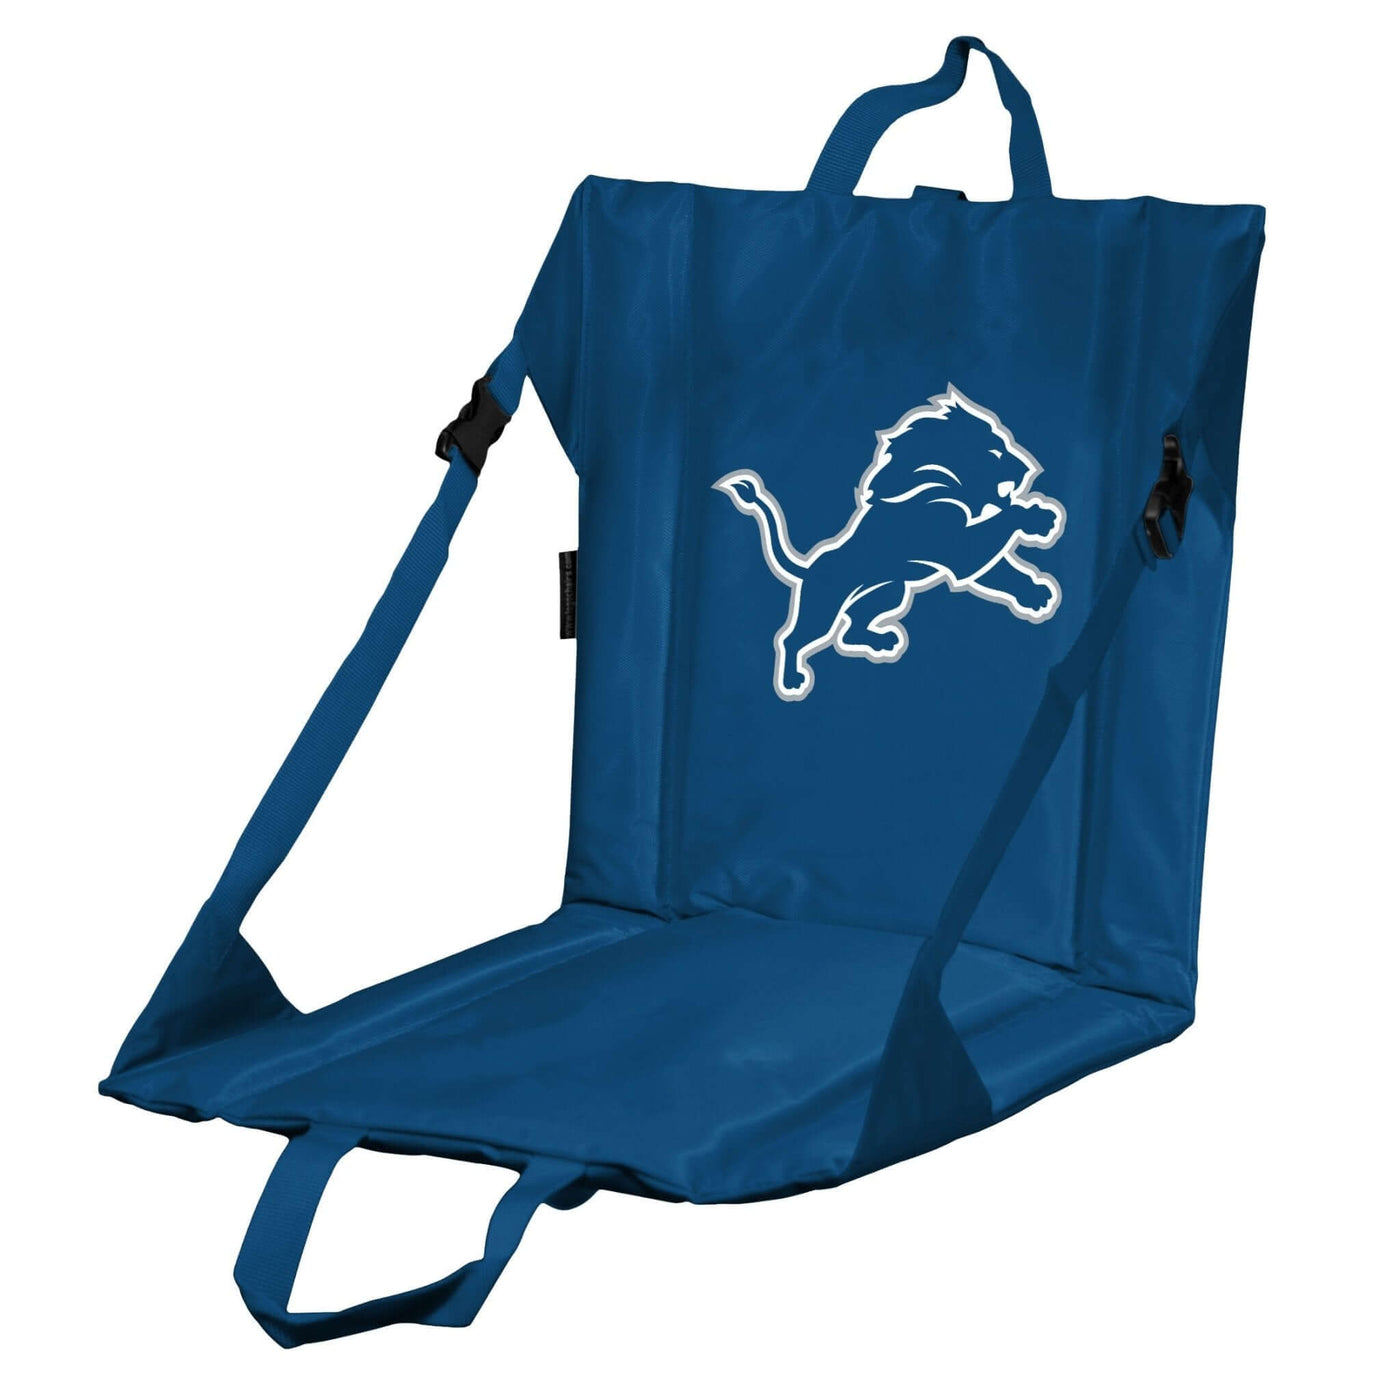 Detroit Lions 2017 Logo Stadium Seat - Logo Brands